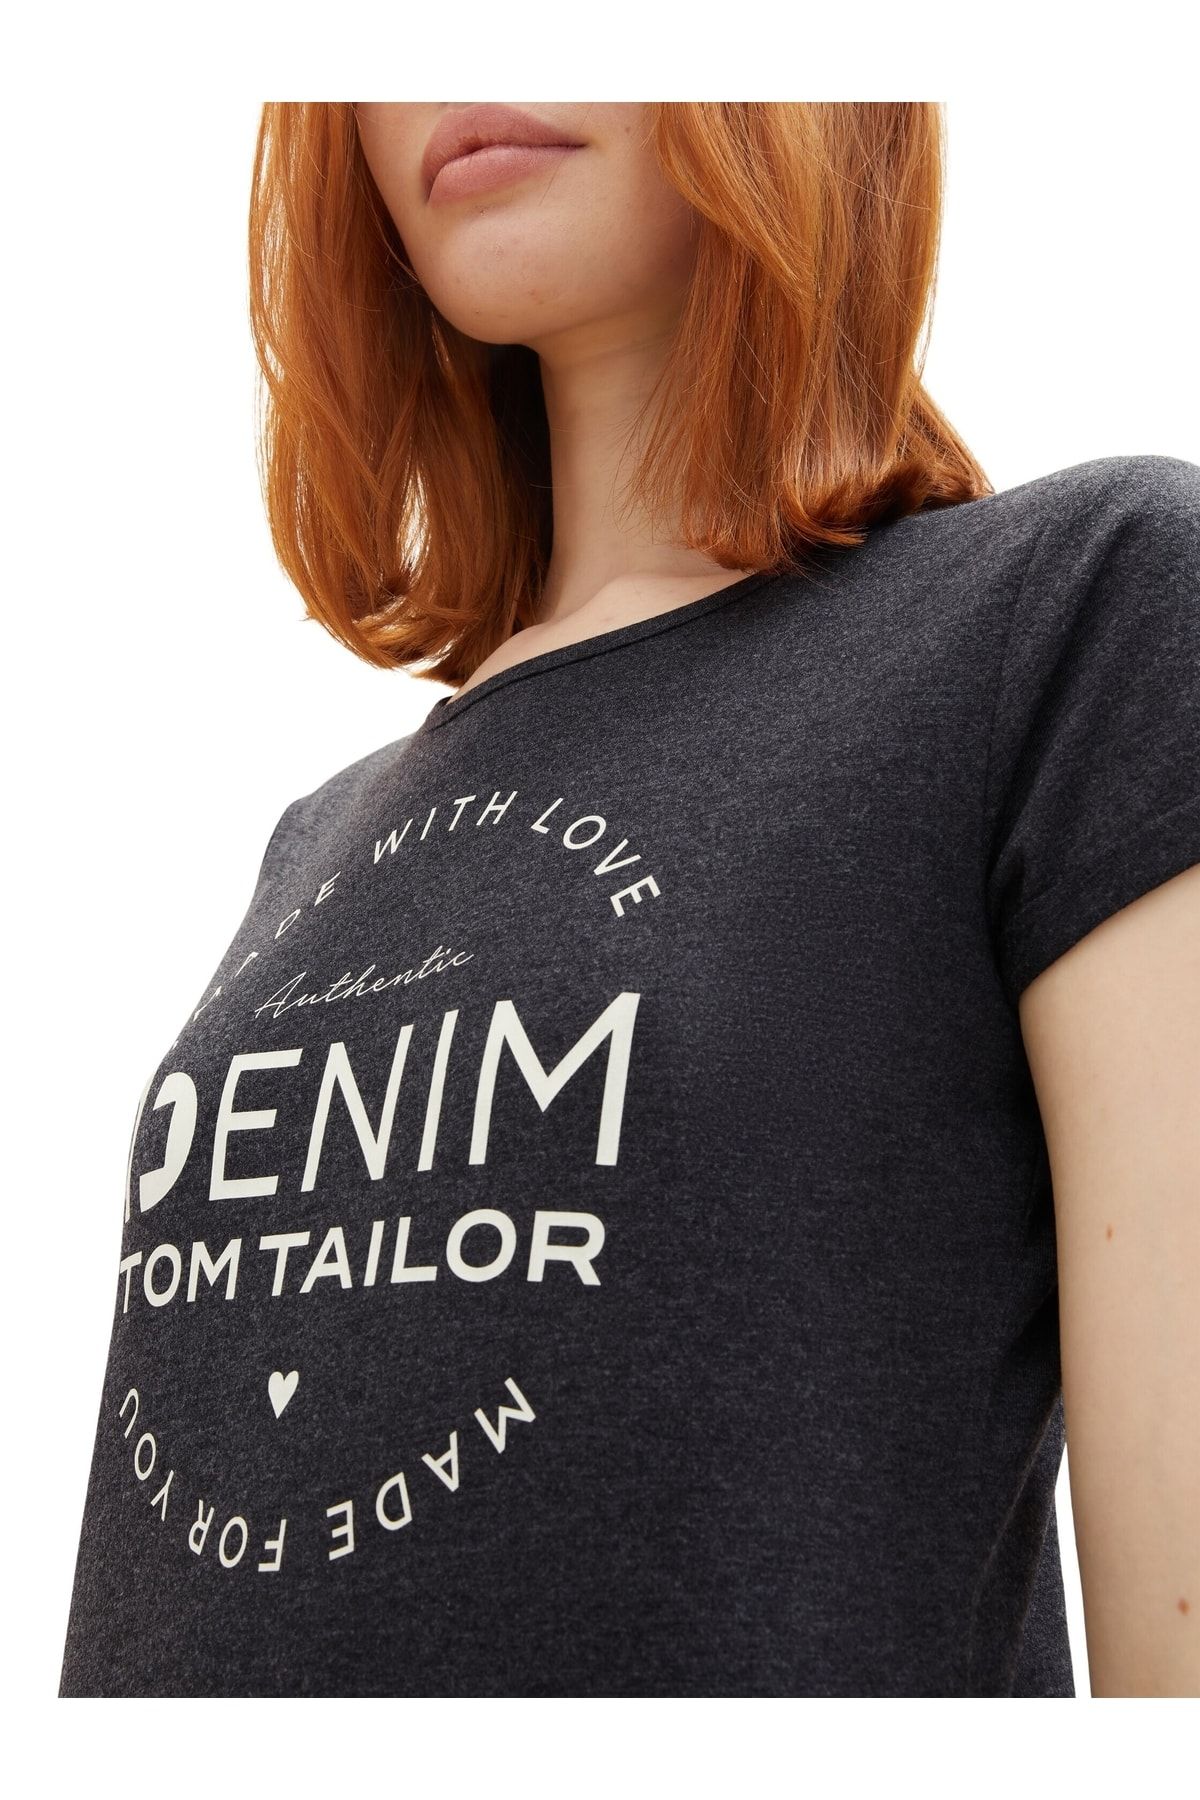 Denim - Tom Regular - fit - Tailor T-Shirt Trendyol Black